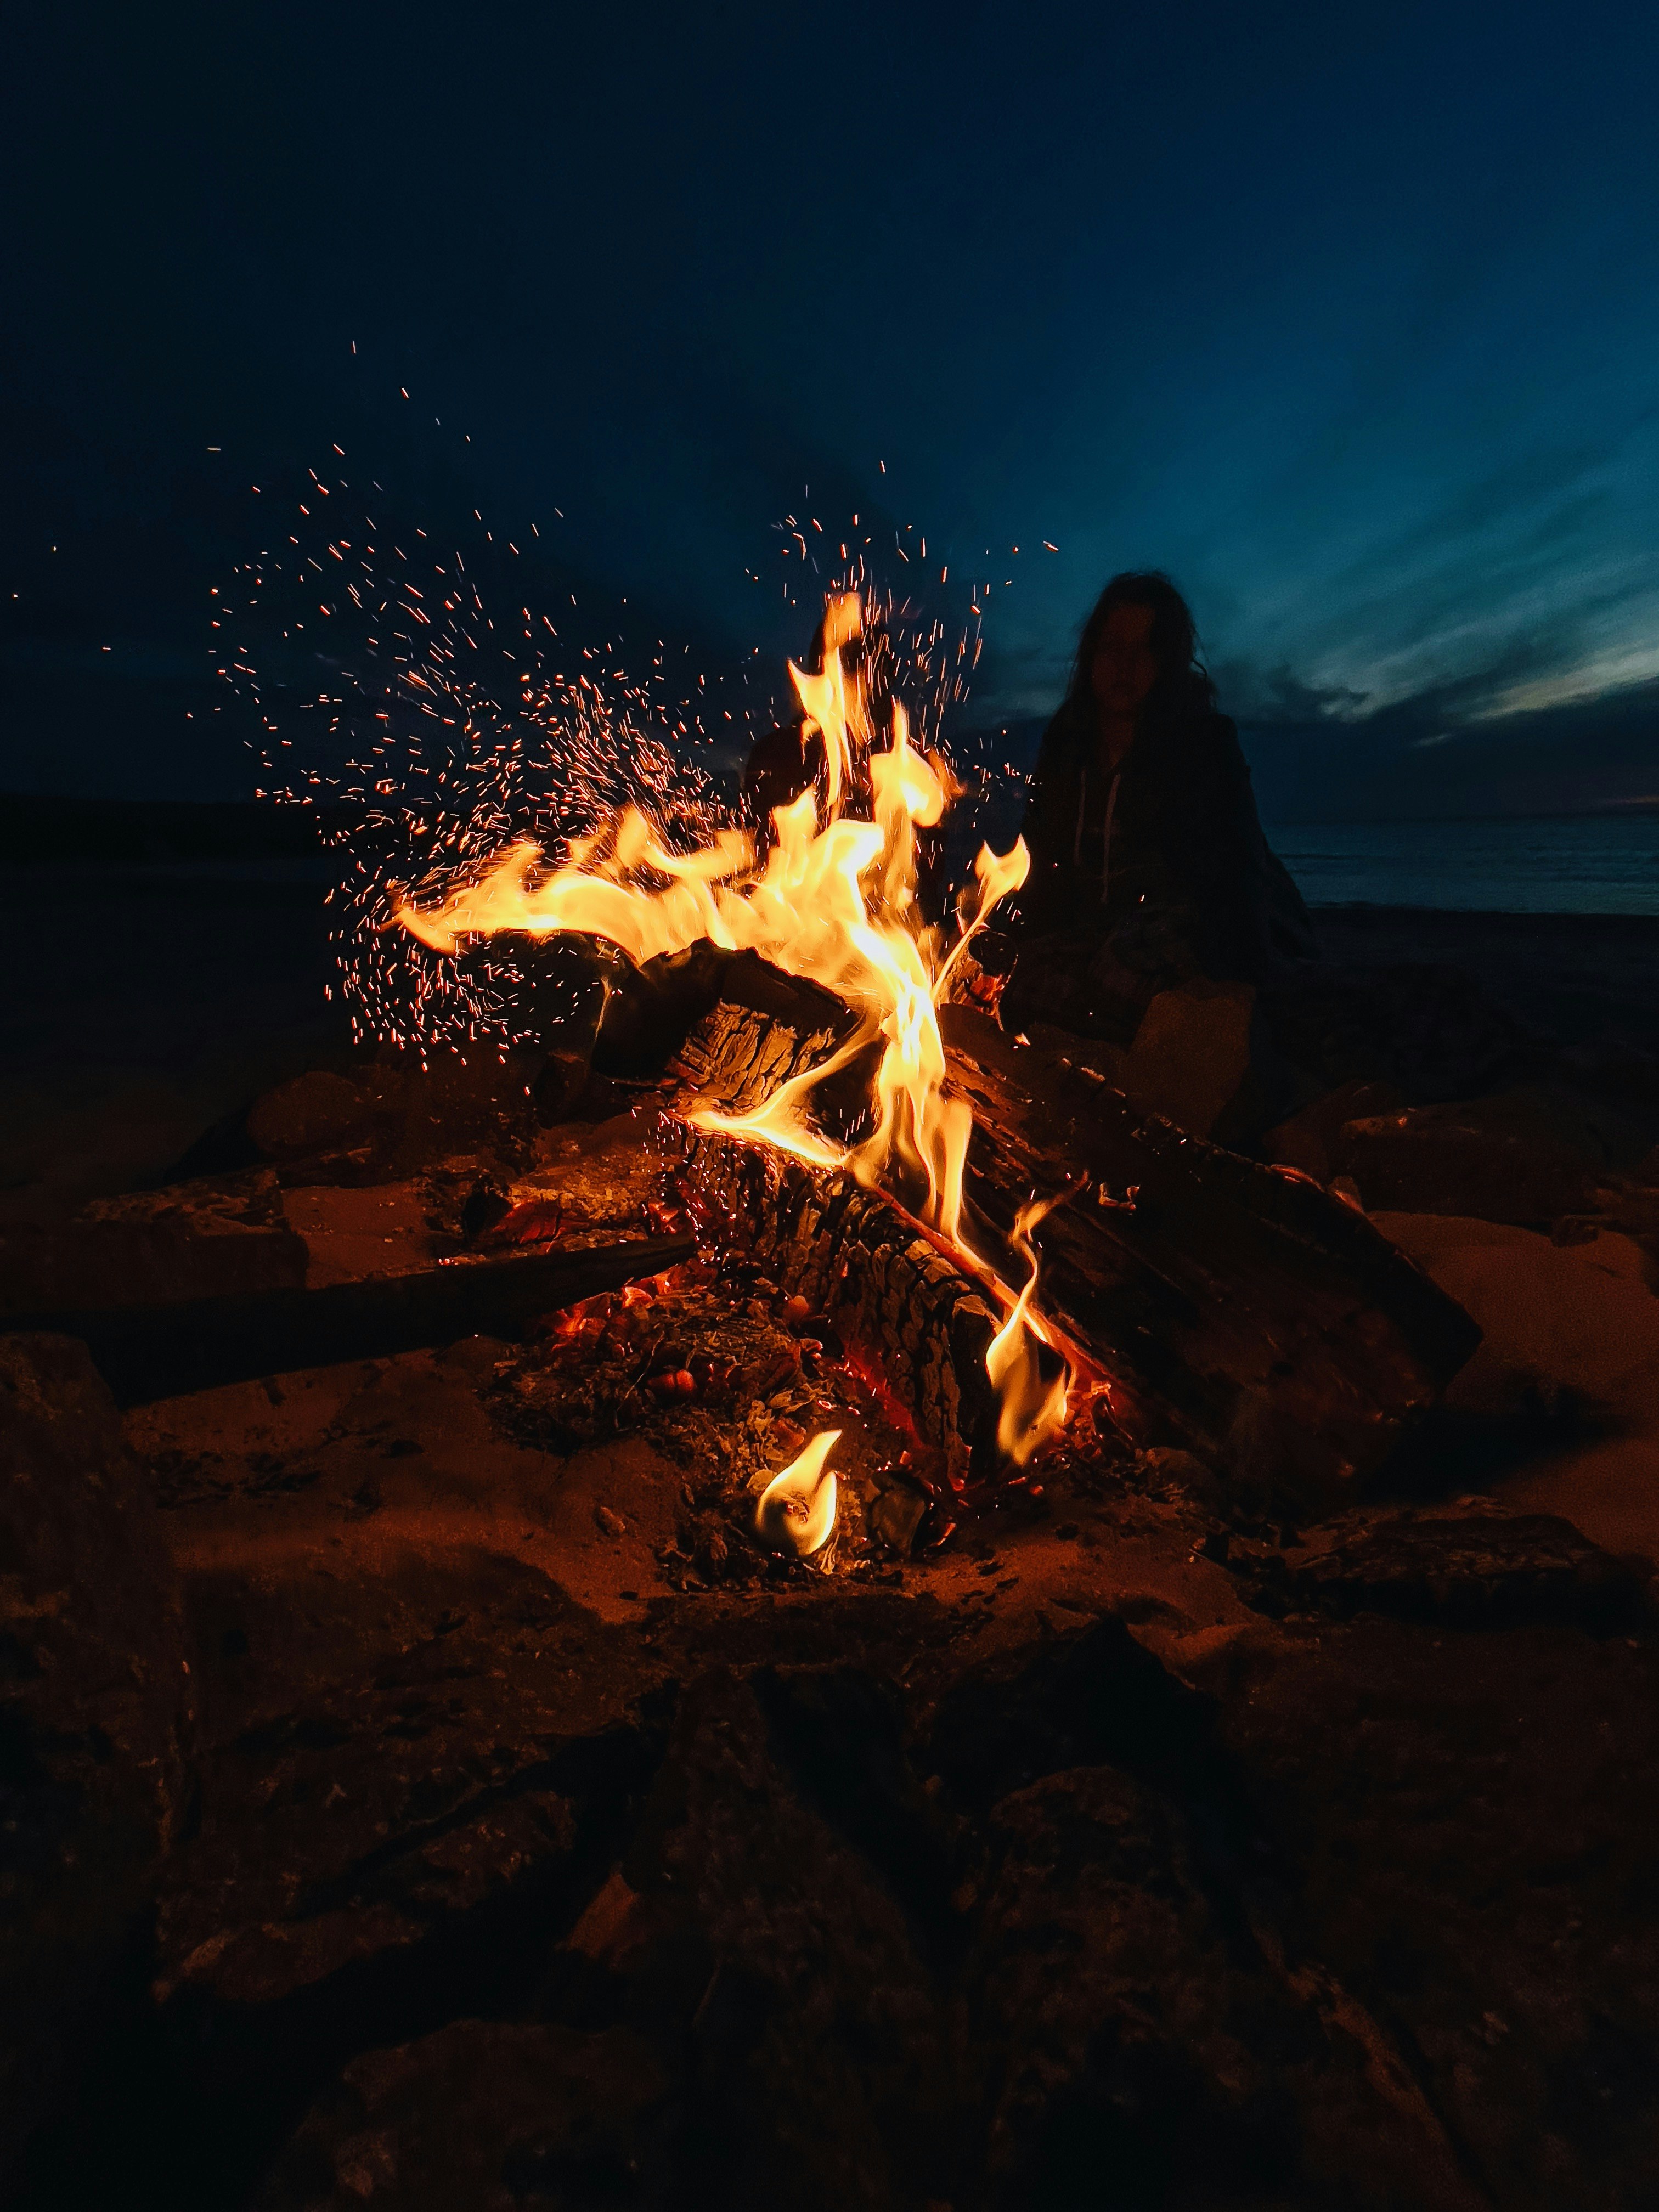 man in black jacket standing near bonfire during night time